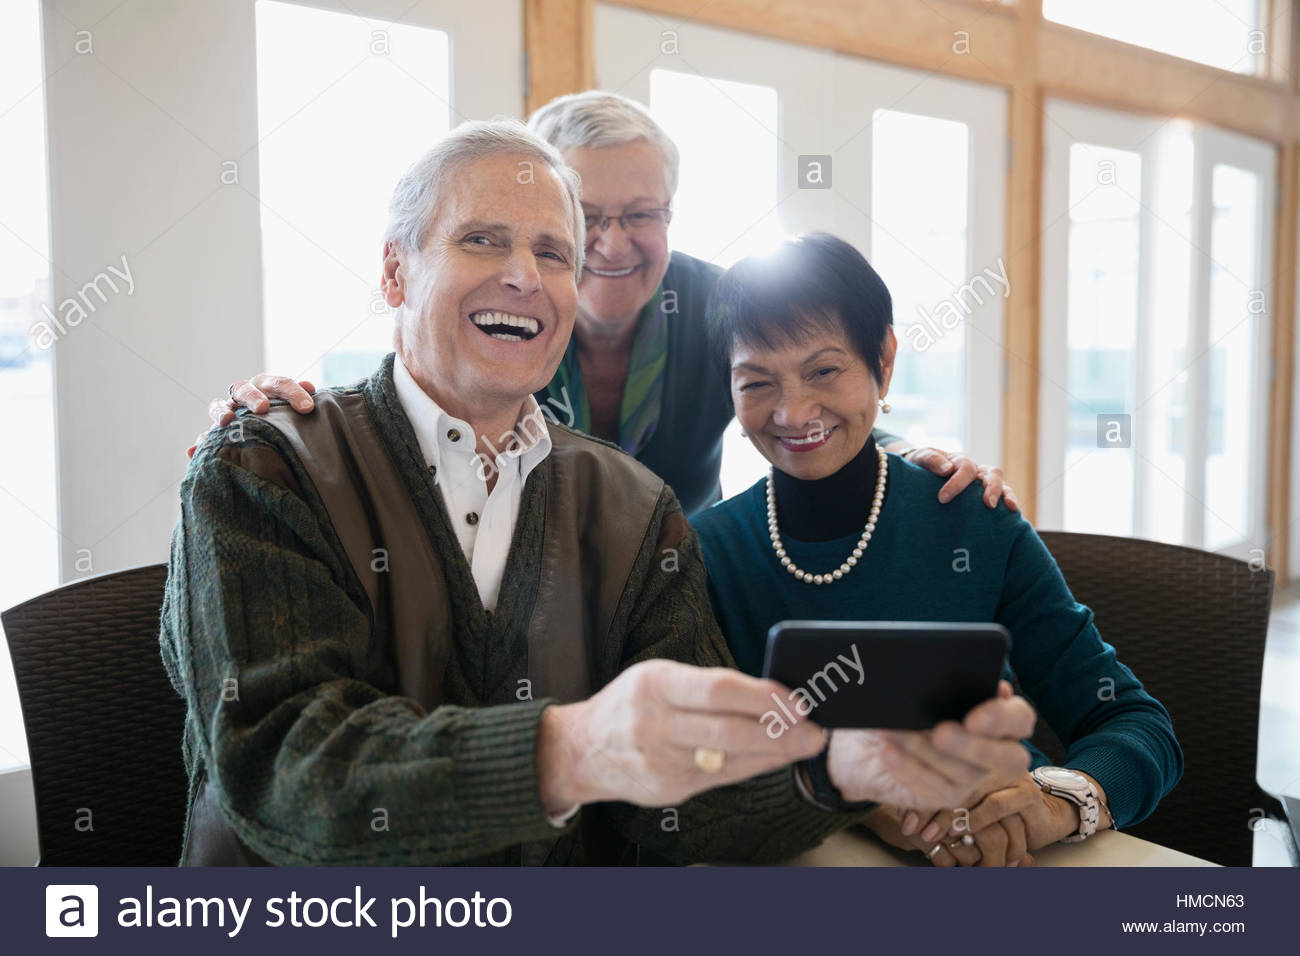 Portrait smiling senior adult friends using smart phone Stock Photo